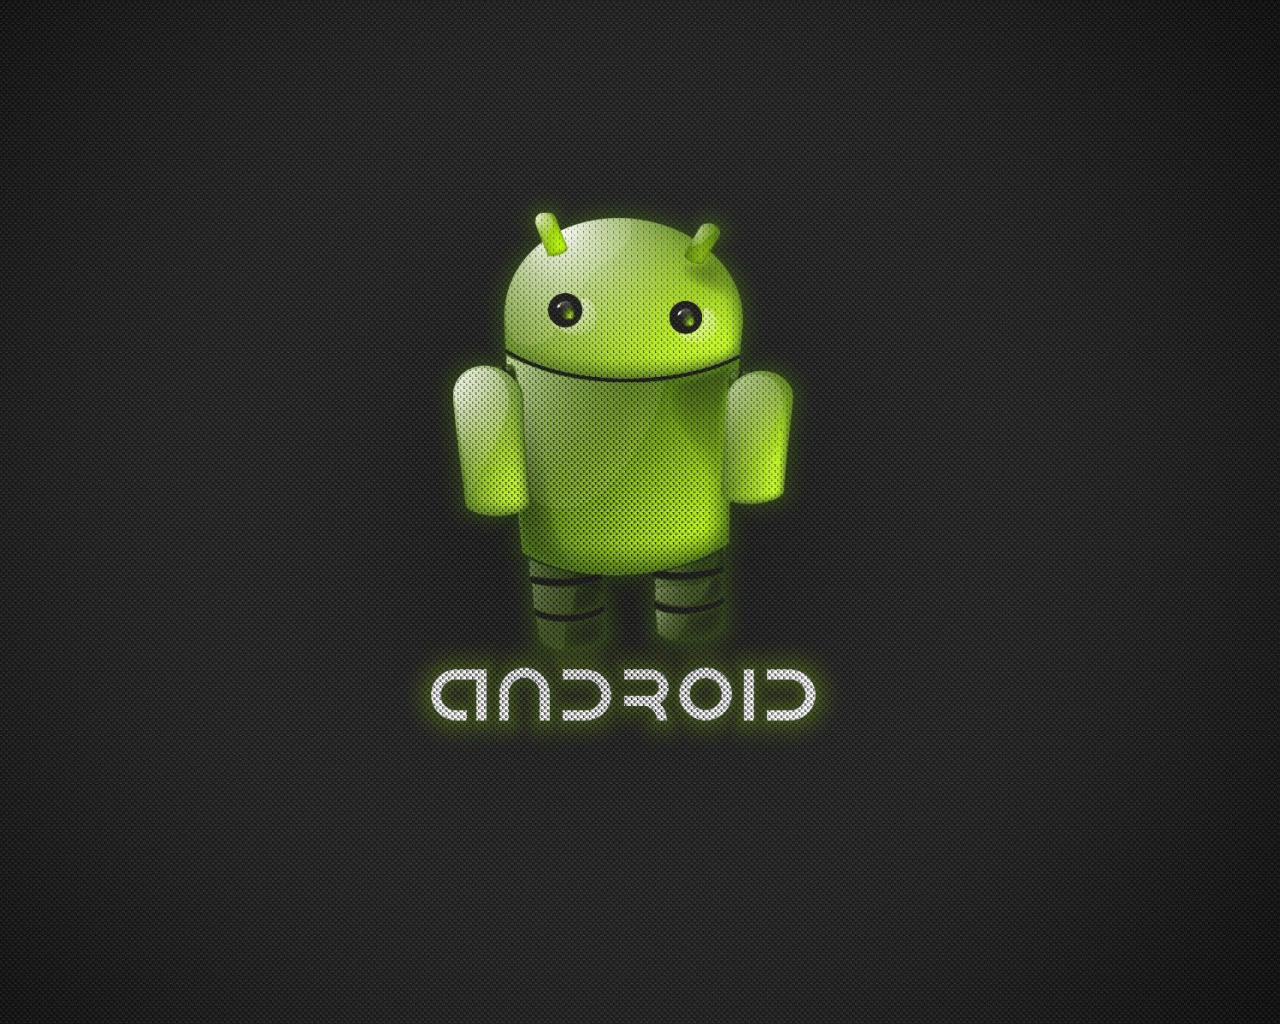 Android 5.0 Lollipop wallpaper 1280x1024